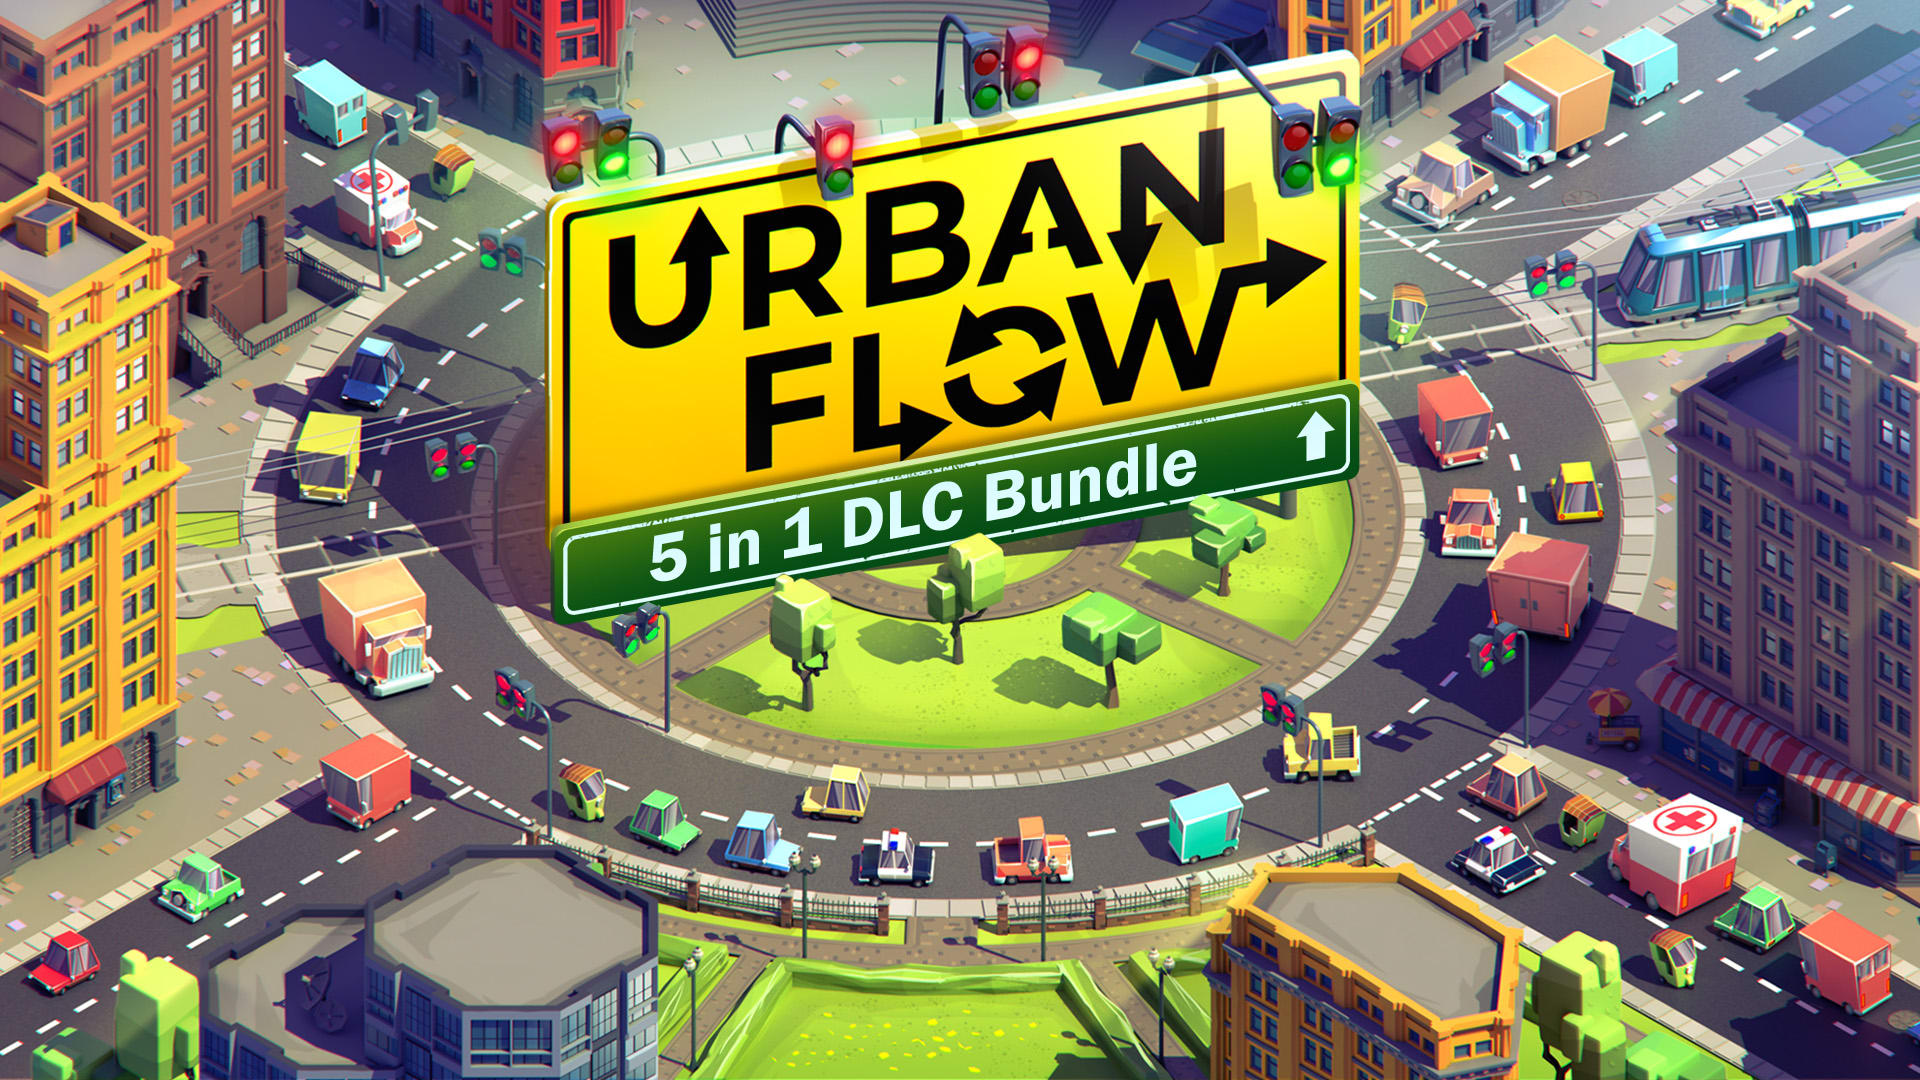 Urban Flow: 5 in 1 DLC Bundle